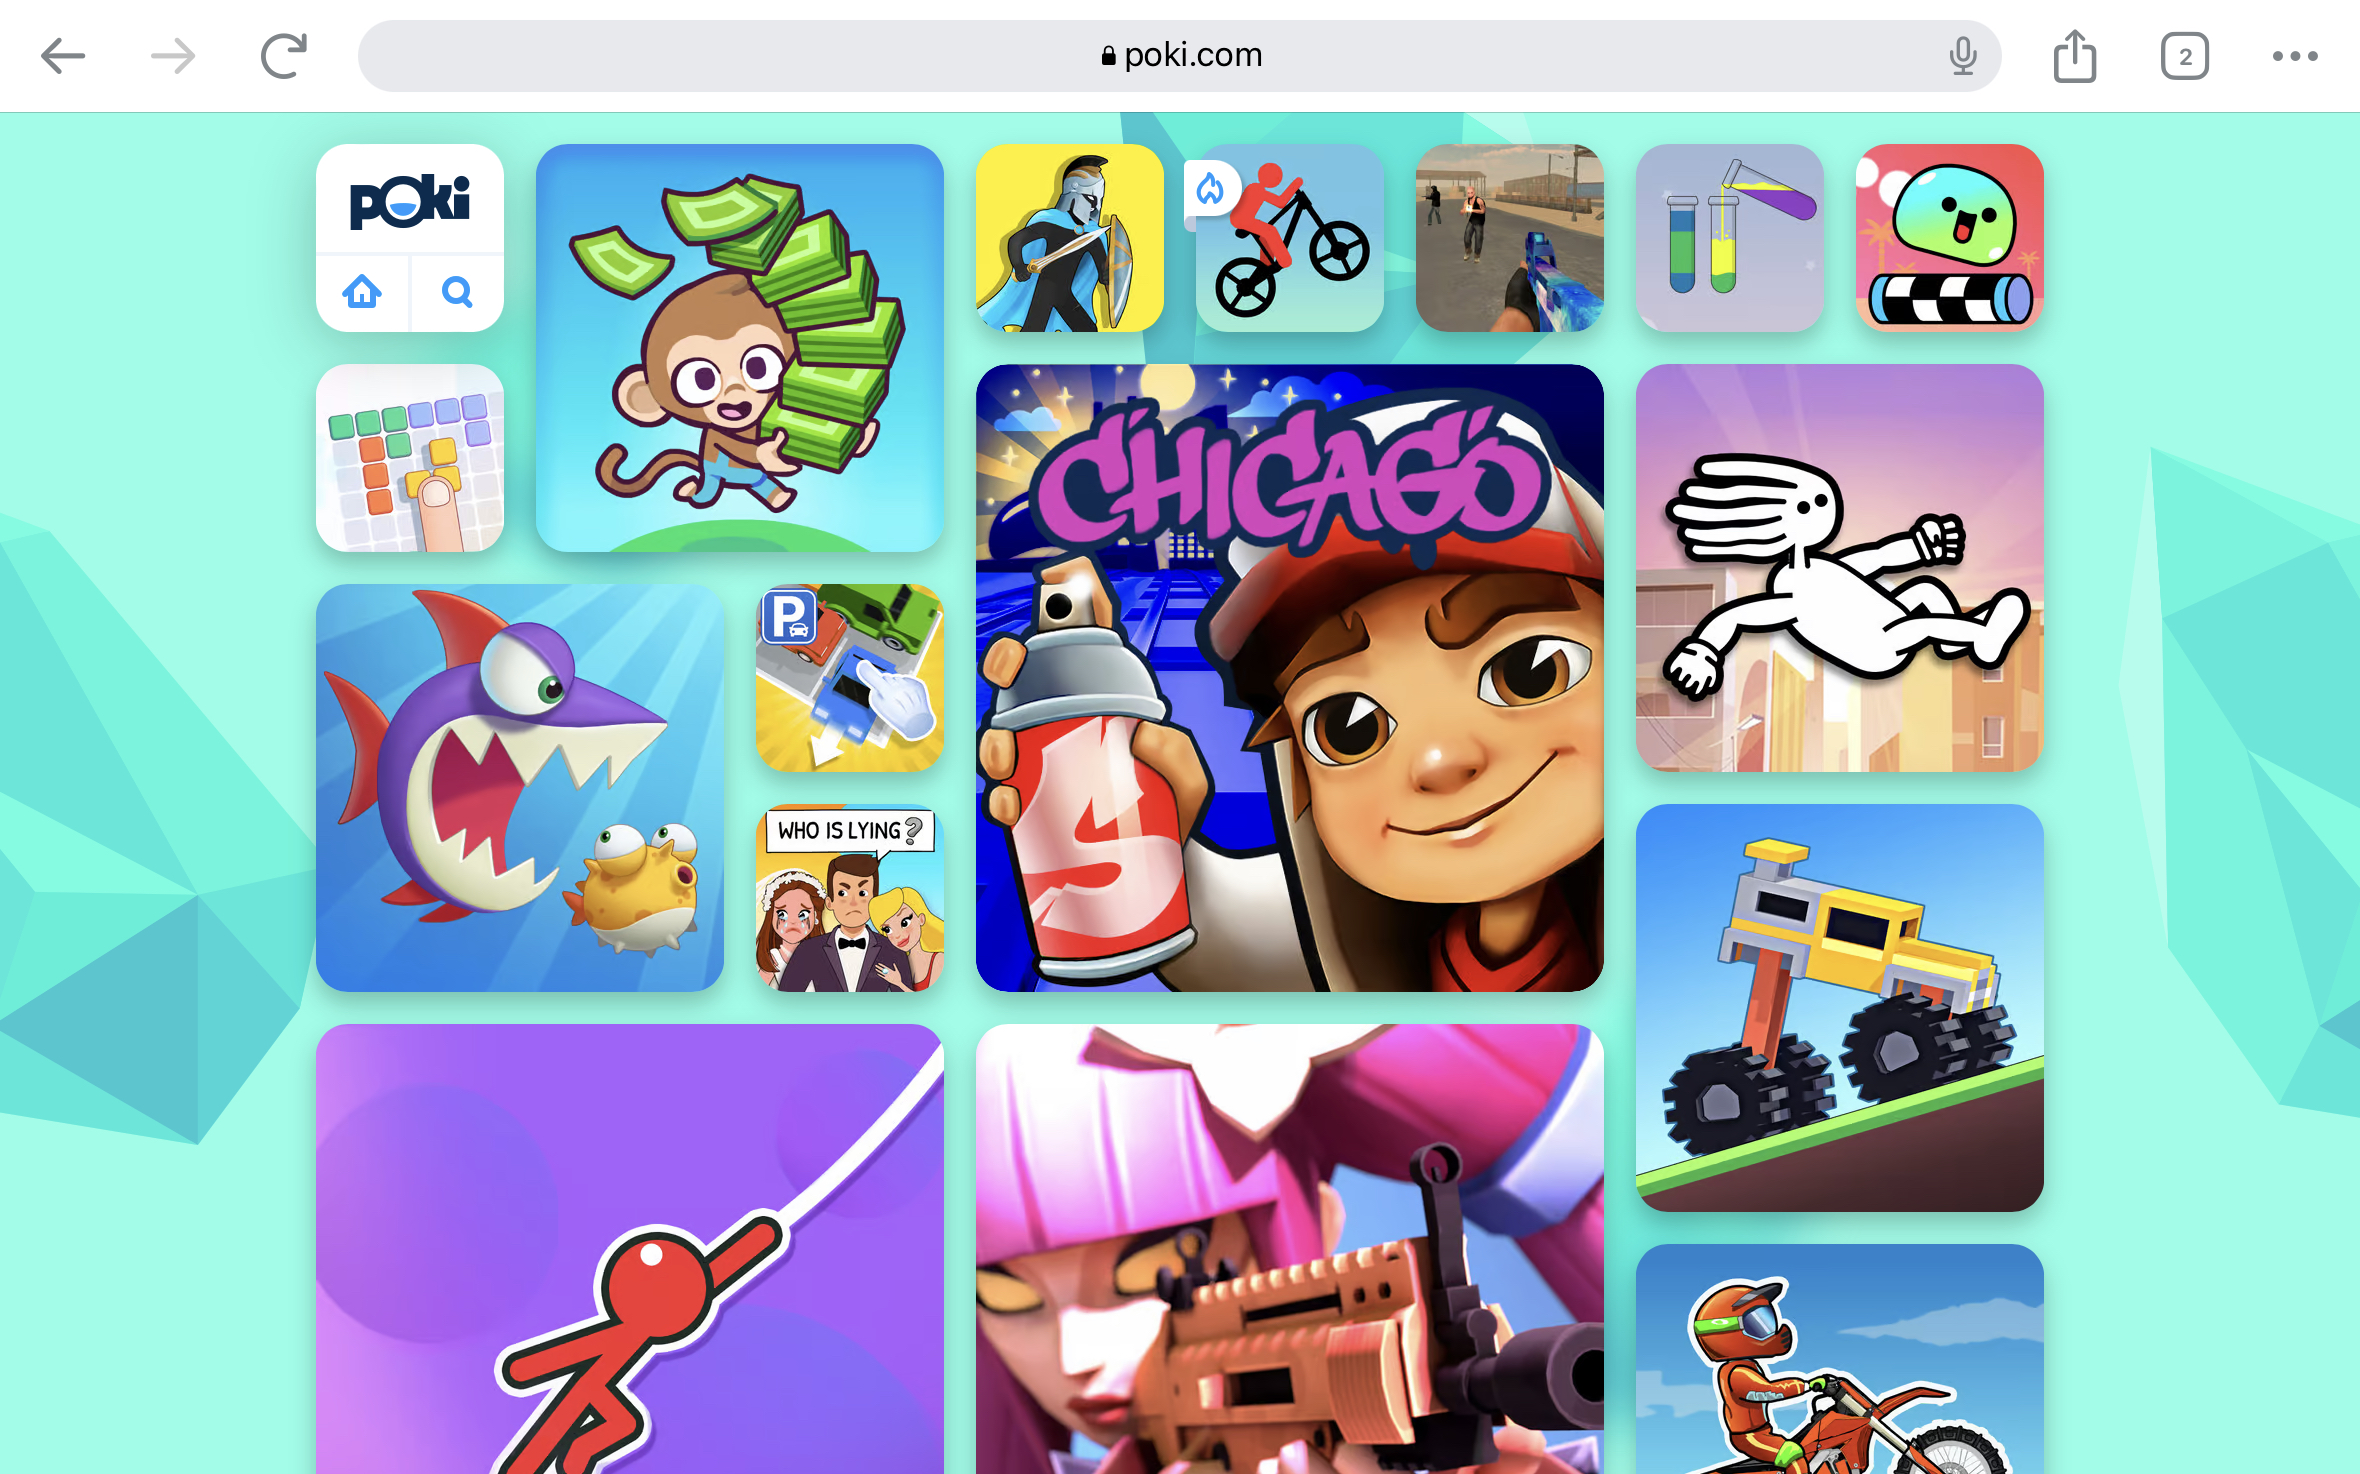 Best Poki Games to Play Online: Google Feud, Monkey Mart, Drive